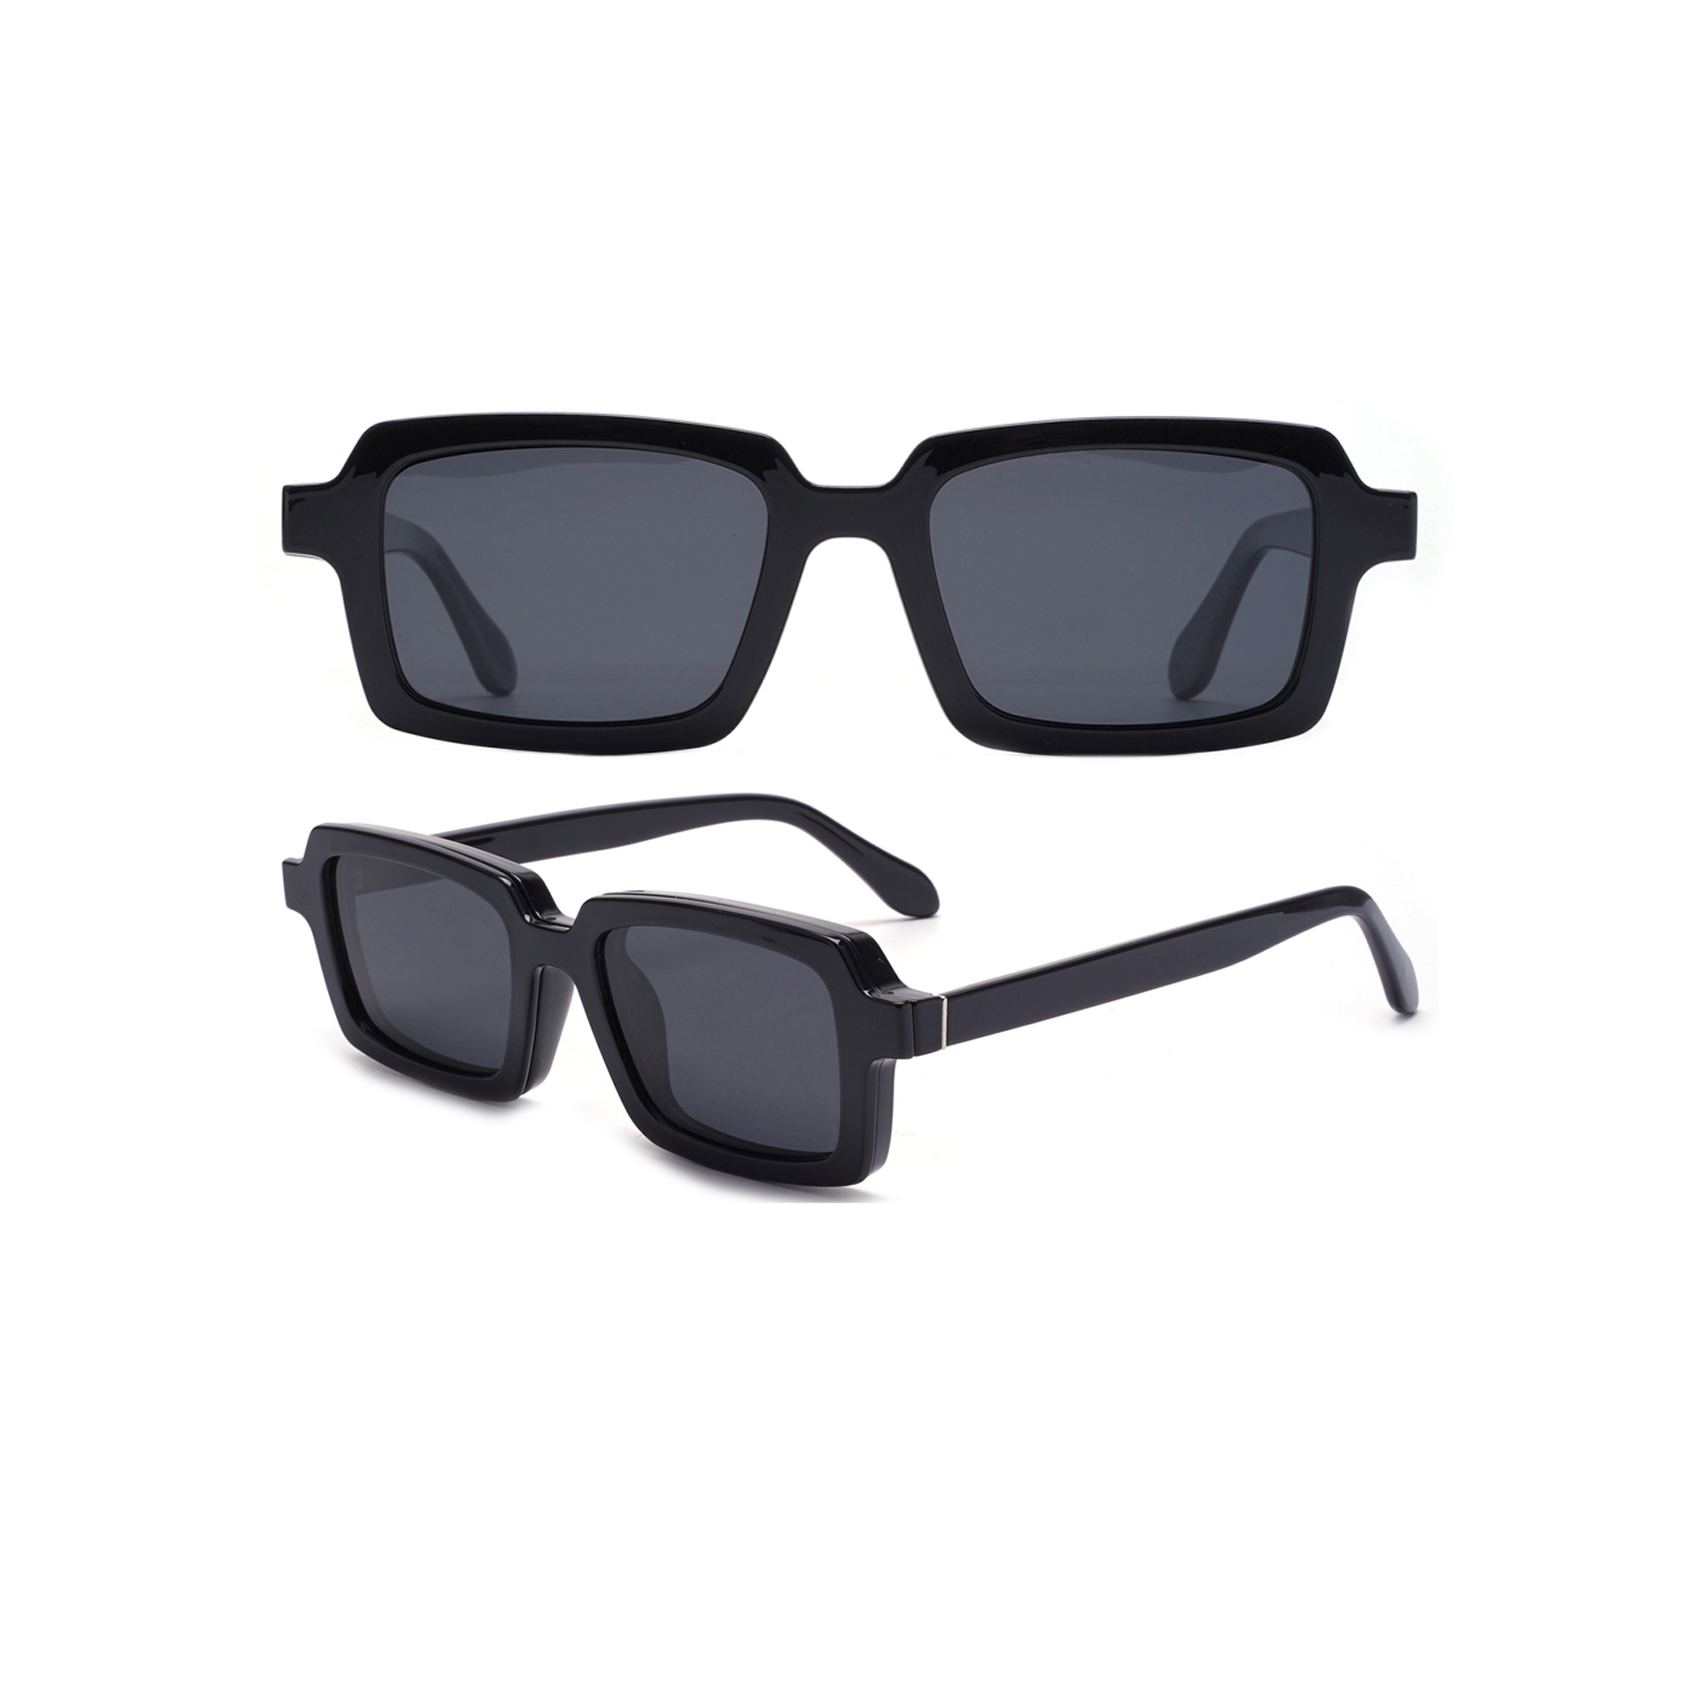 Unisex Rectangular Clip-on Sunglasses Sunglasses Clipon Buy Sunglasses in Bulk from China